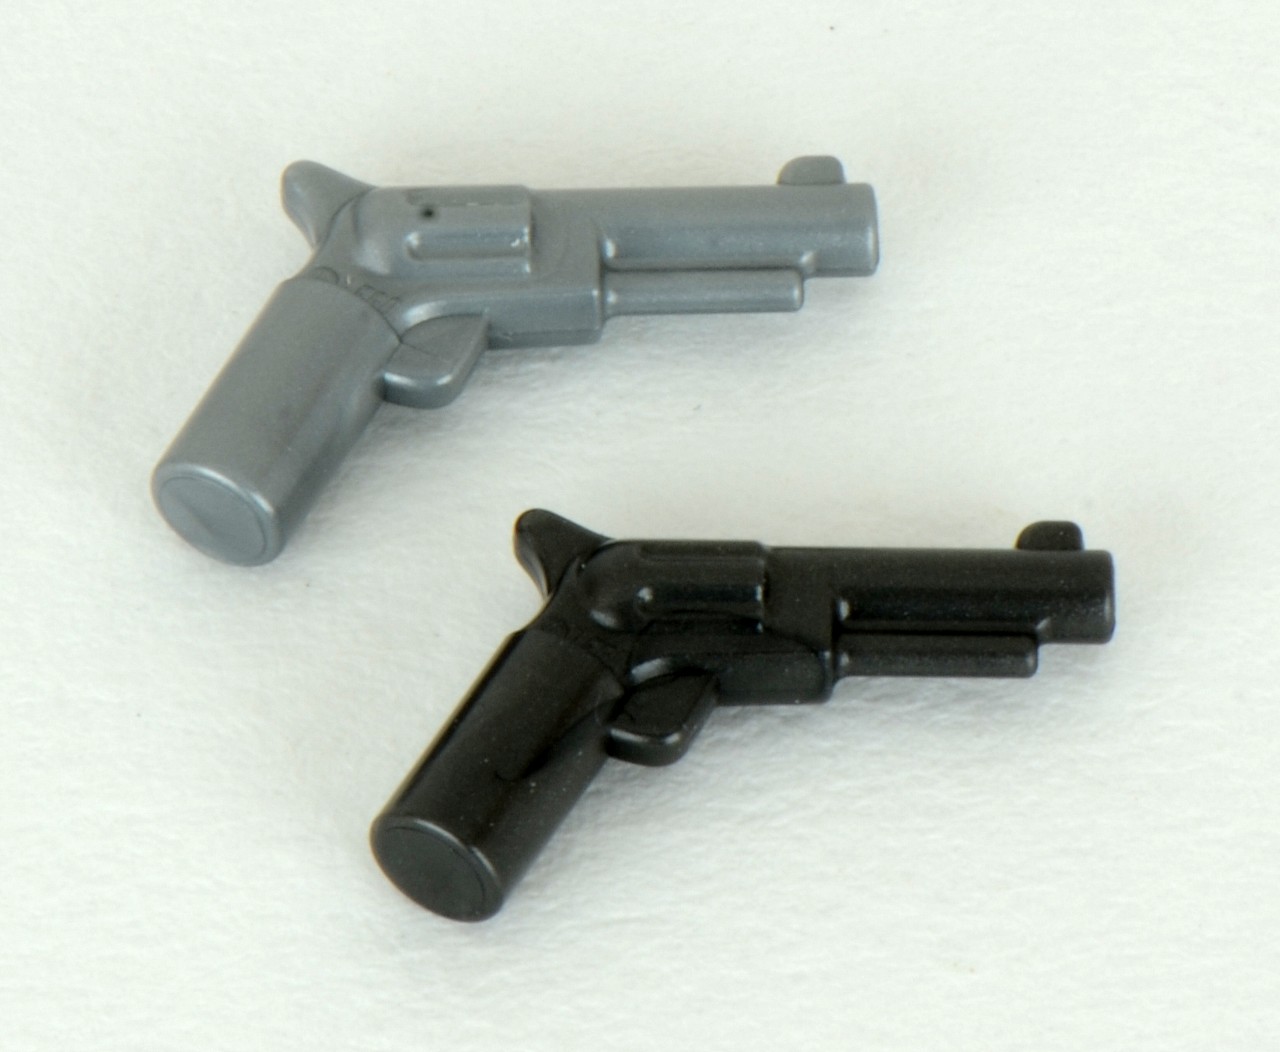 a pair of black metal toy guns